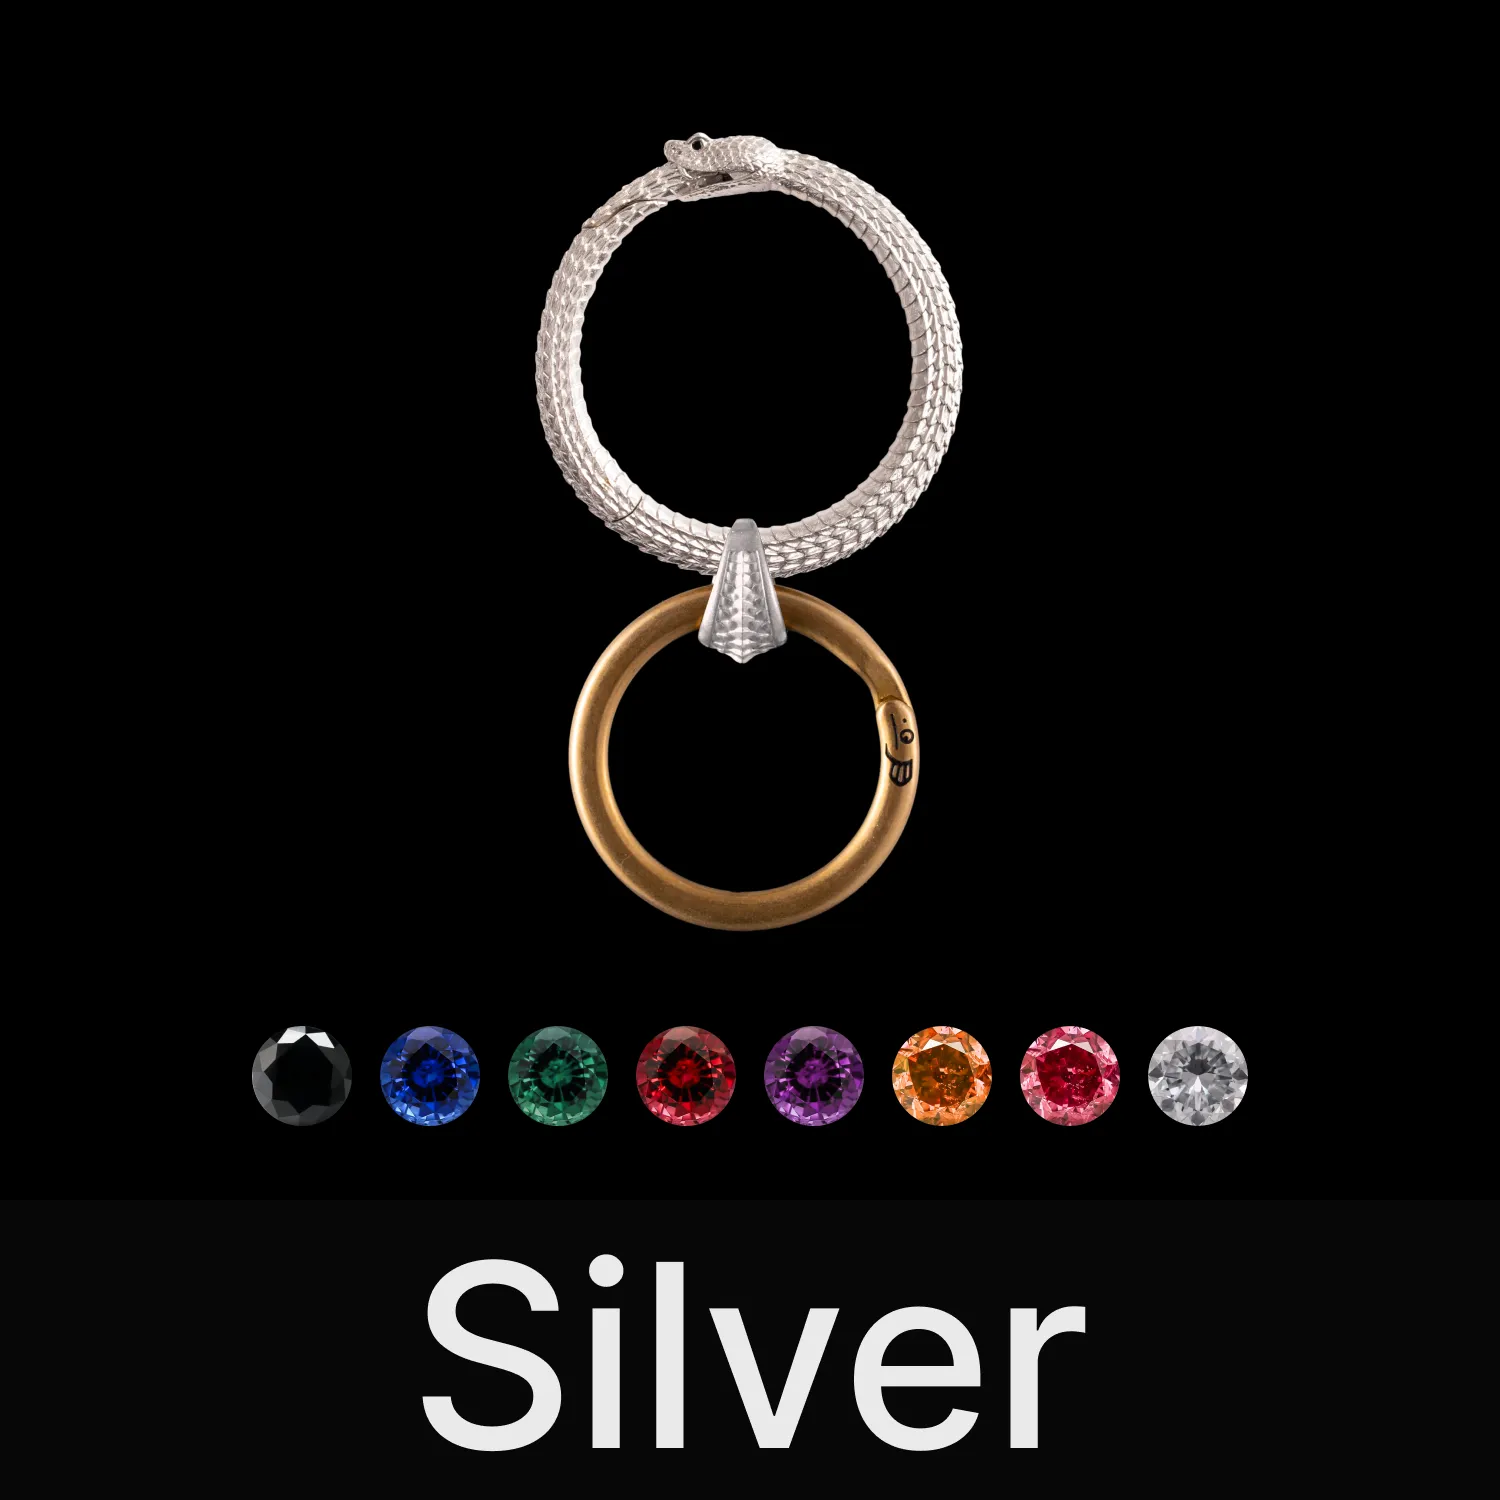 Ouroboros Keychain Silver & Gemstone